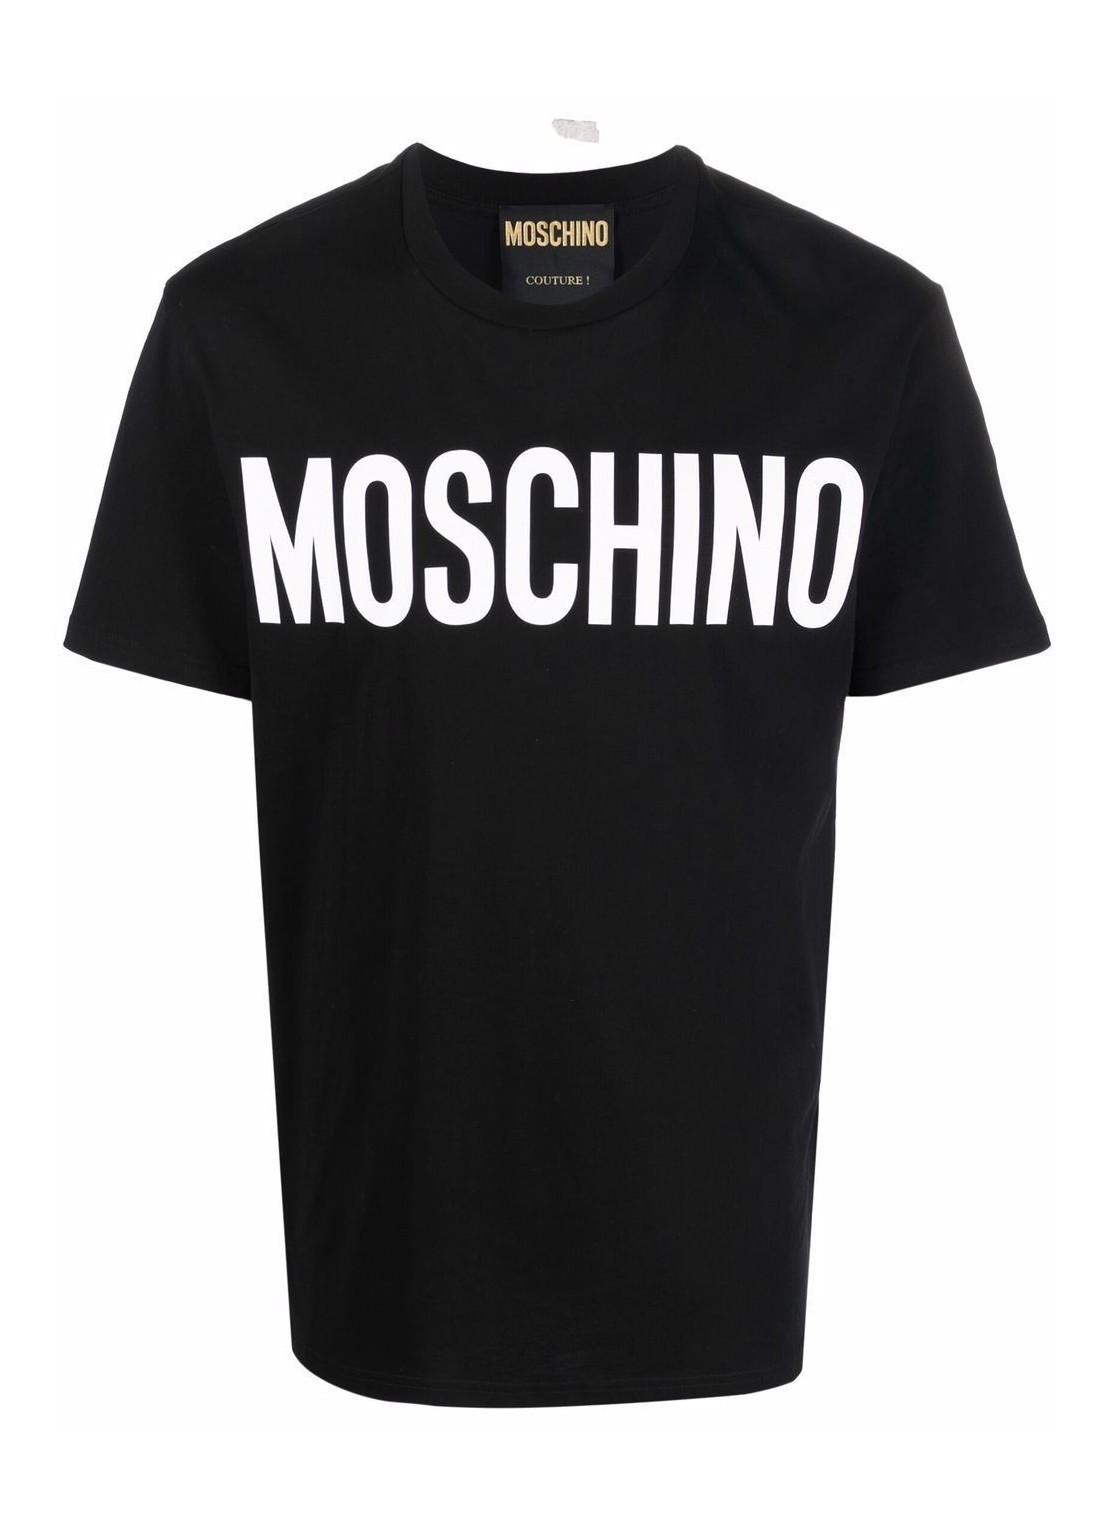 Camiseta moschino couture organic cotton jersey - 07012041 a1555 talla negro
 